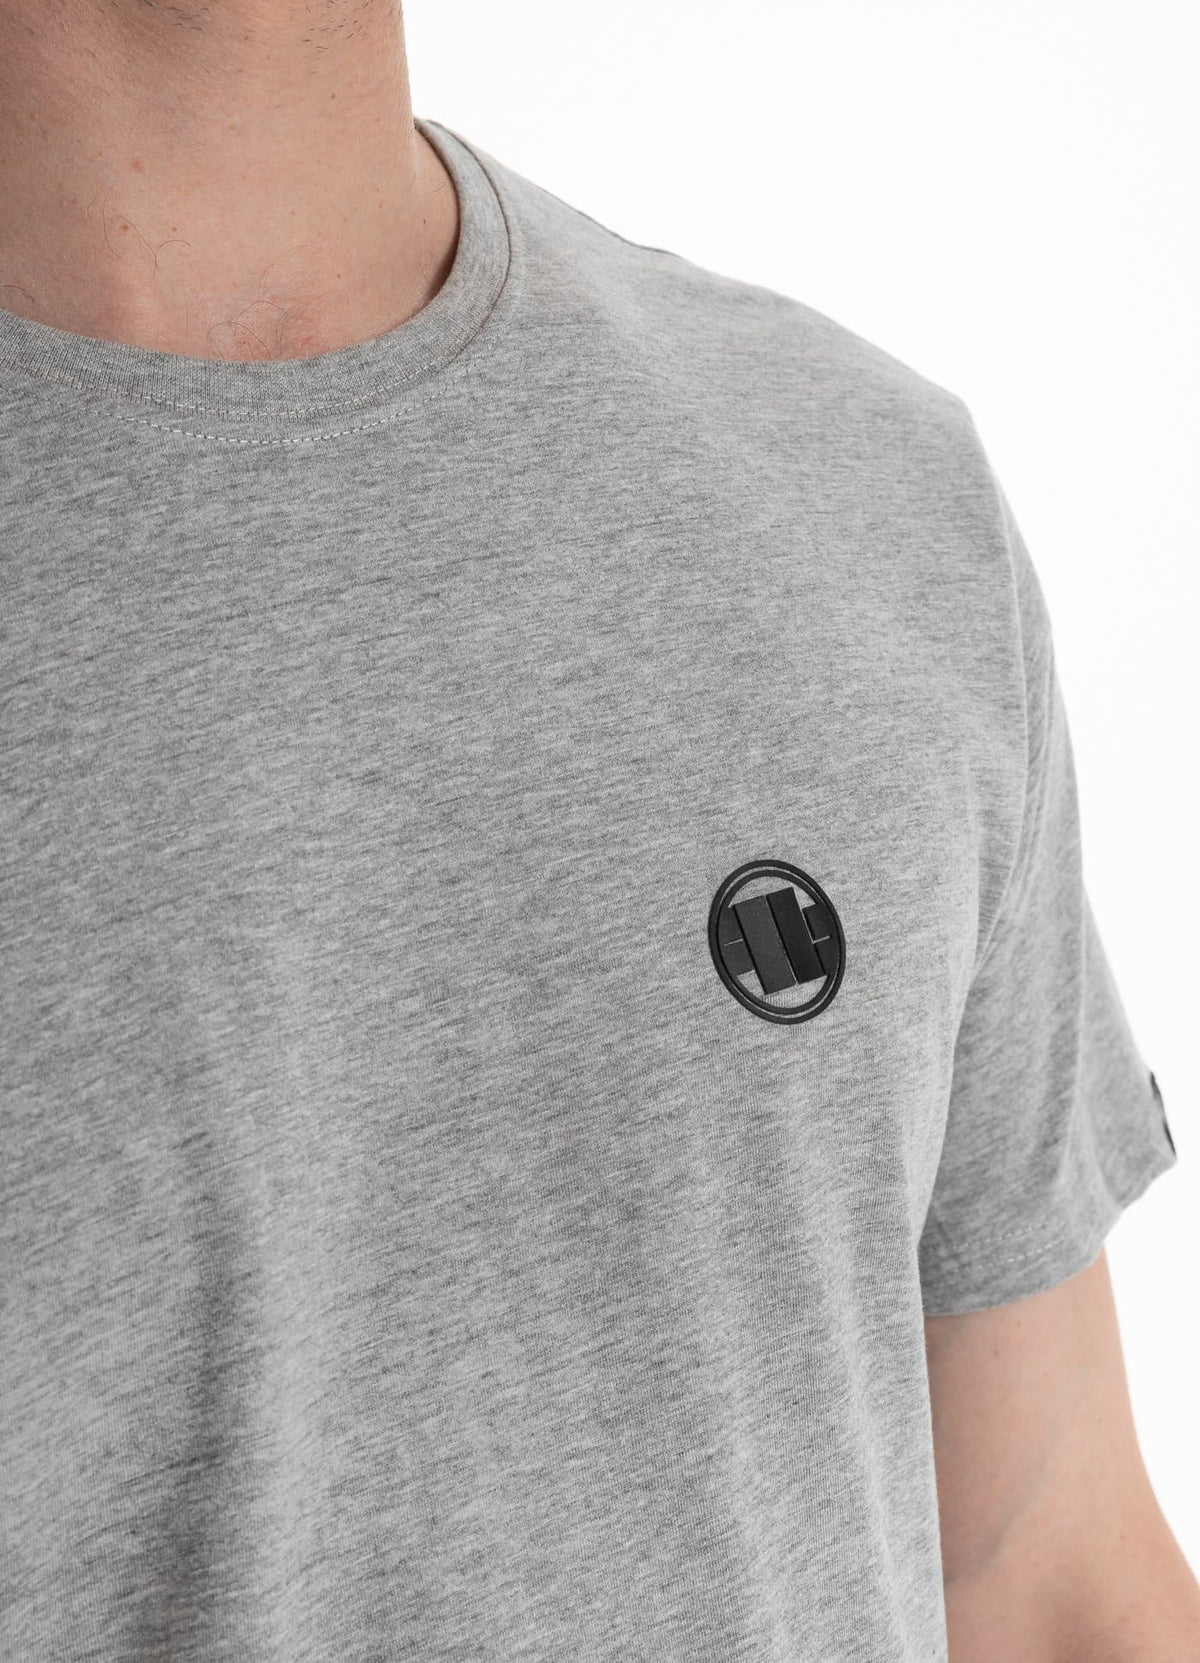 T-Shirt SMALL LOGO 21 Grey MLG - Pitbull West Coast International Store 